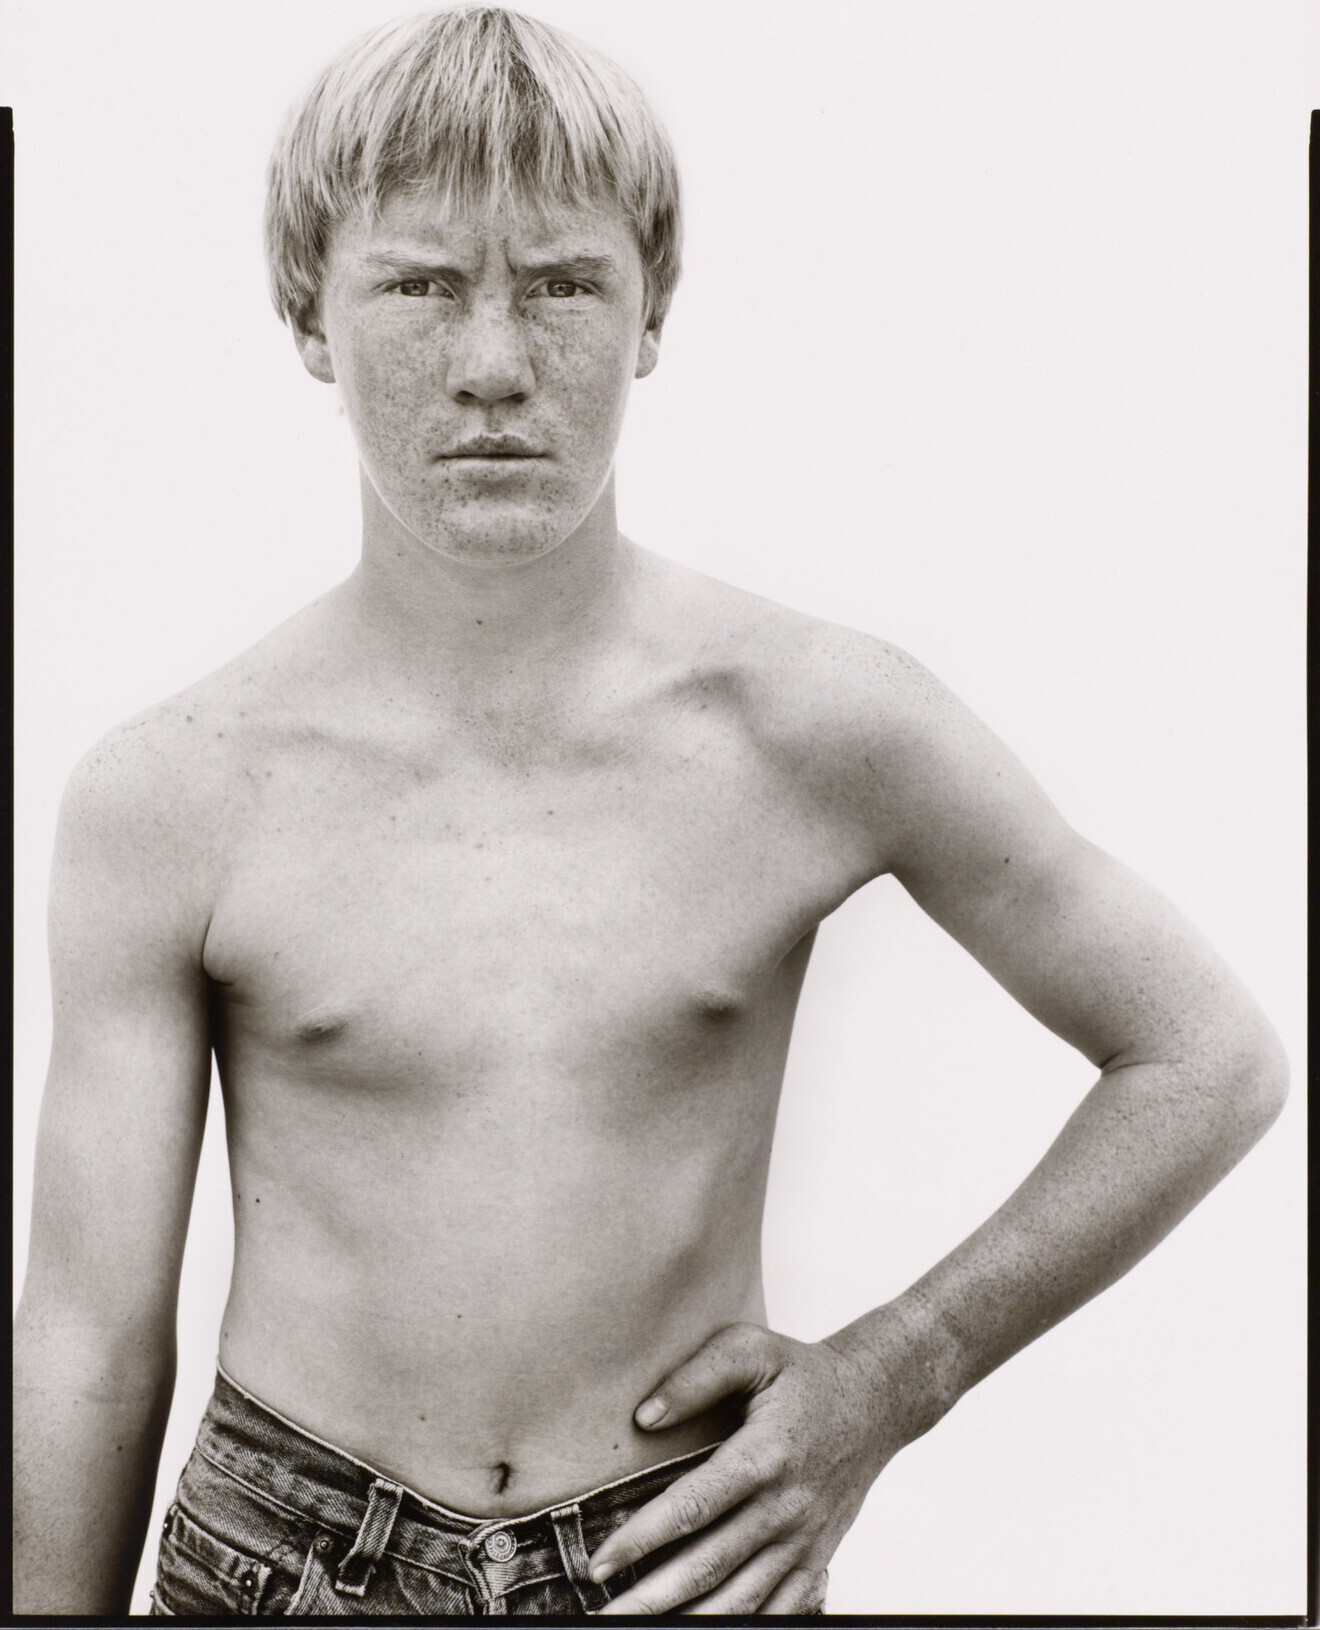 Марк Вятт, двенадцать лет, Берли, Айдахо, 1983 г. Фотограф Ричард Аведон